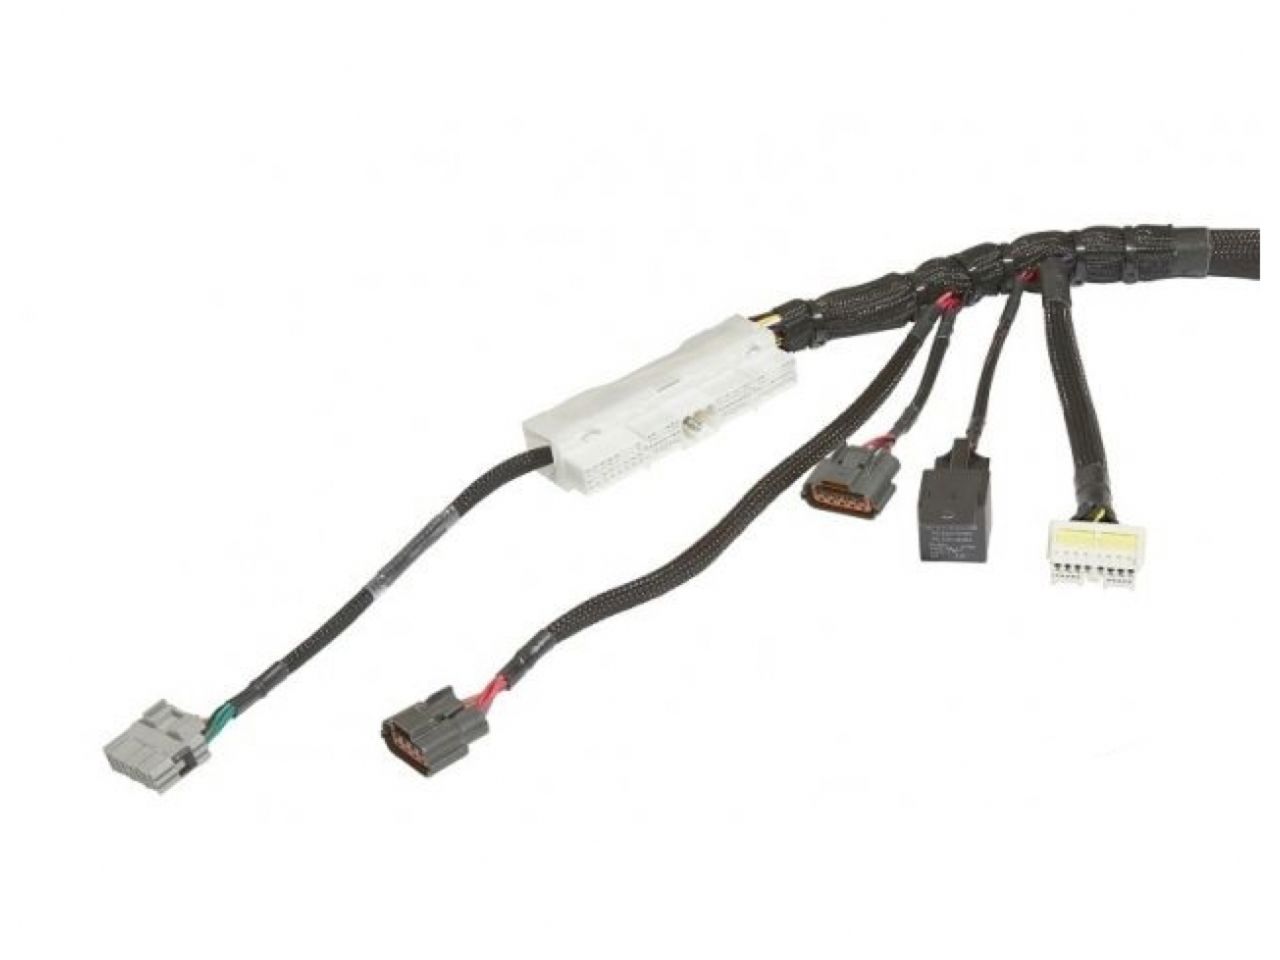 Wiring Specialties S13 SR20DET Wiring Harness for Datsun 240Z - PRO SERIES